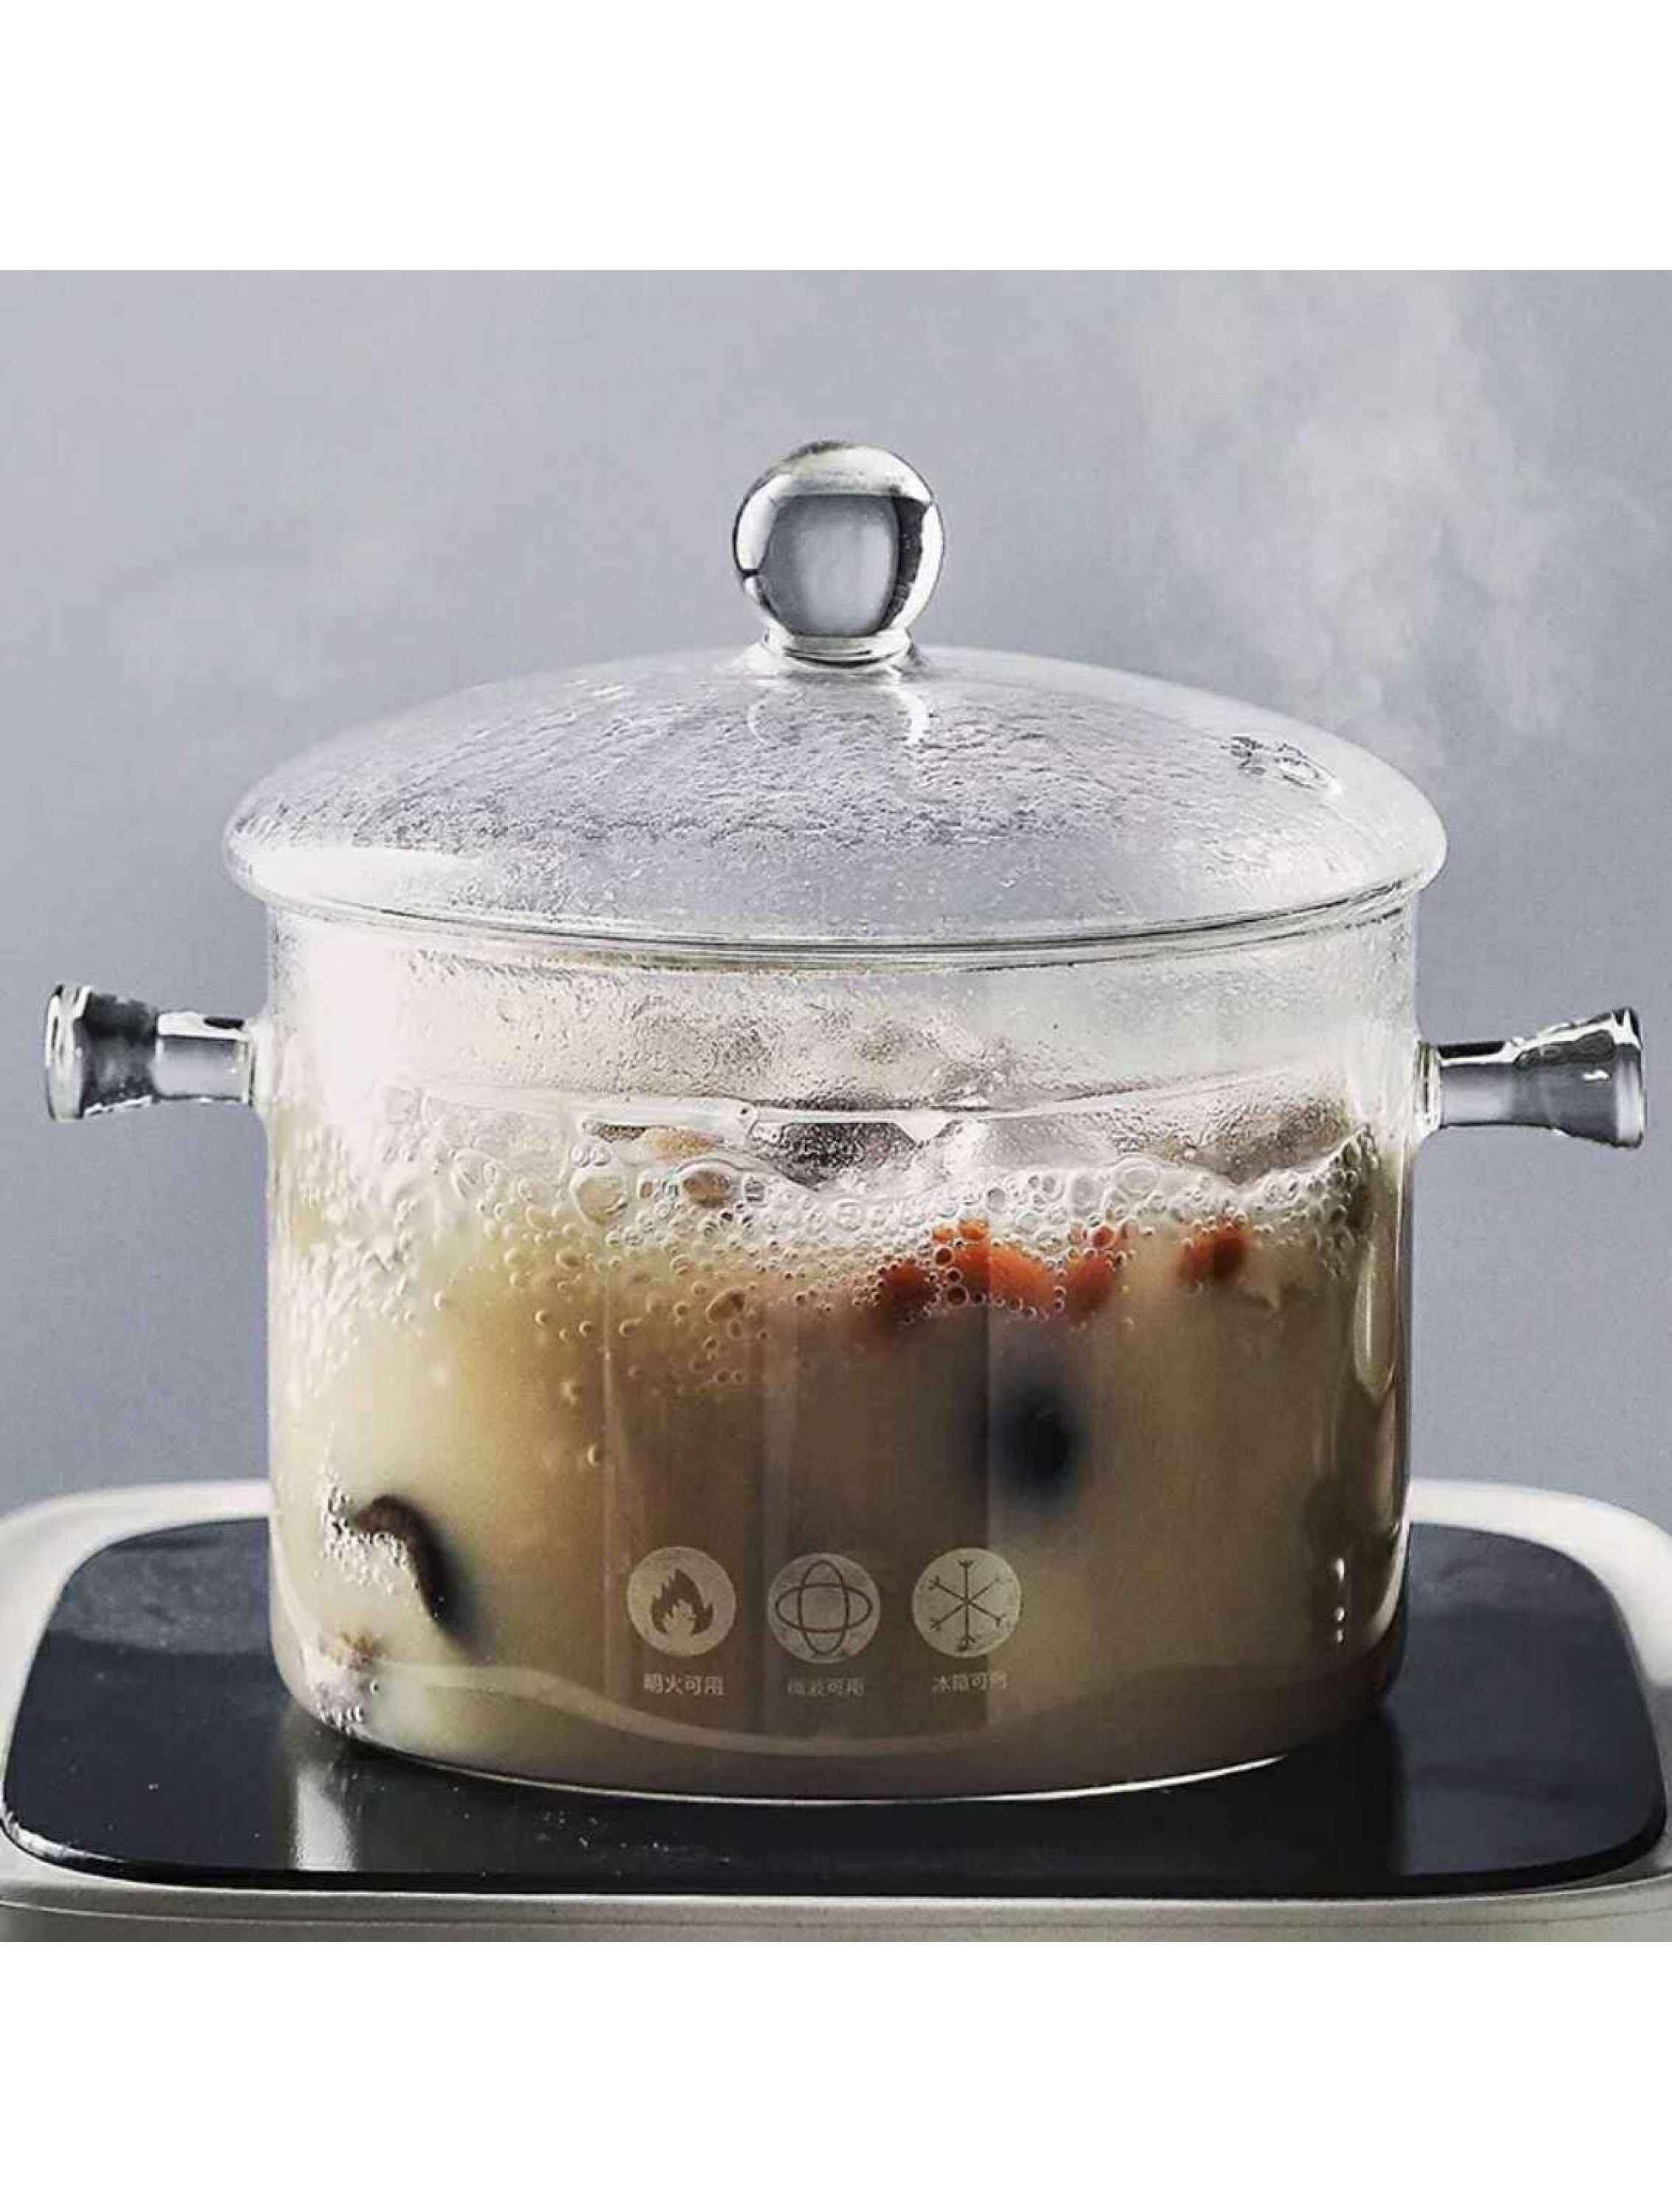 Baker's Basics Saucepans Glass Pot Casserole Baking Oven Blooming Heat-resistant Glass Cooking Pot Covered Saucepan with Lid Pasta Pot Cookware-1.1quart 1L Clear - BKABSGIY5